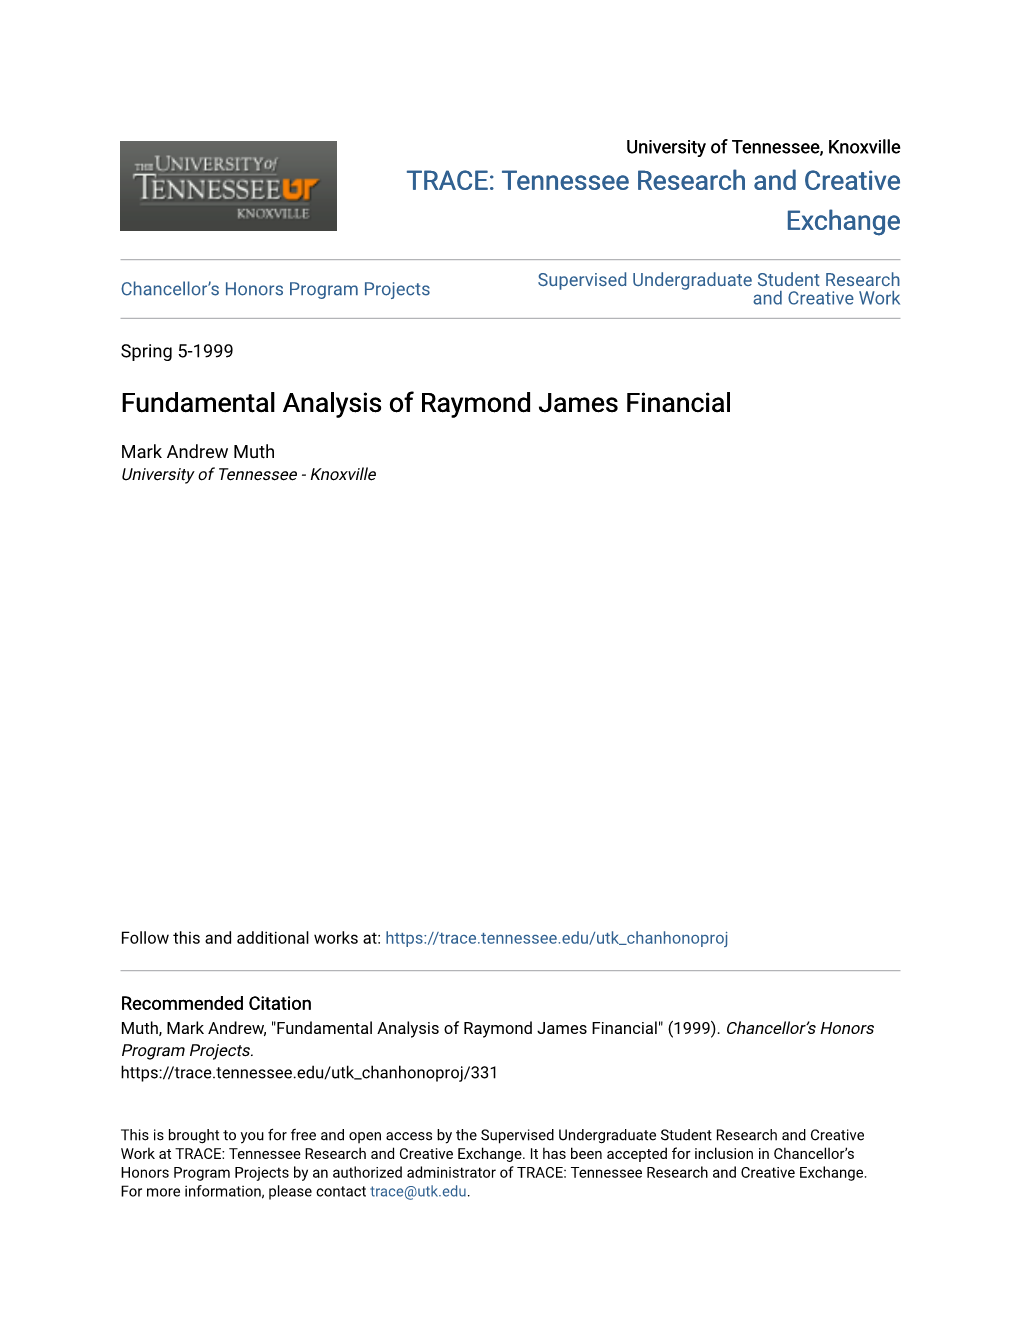 Fundamental Analysis of Raymond James Financial